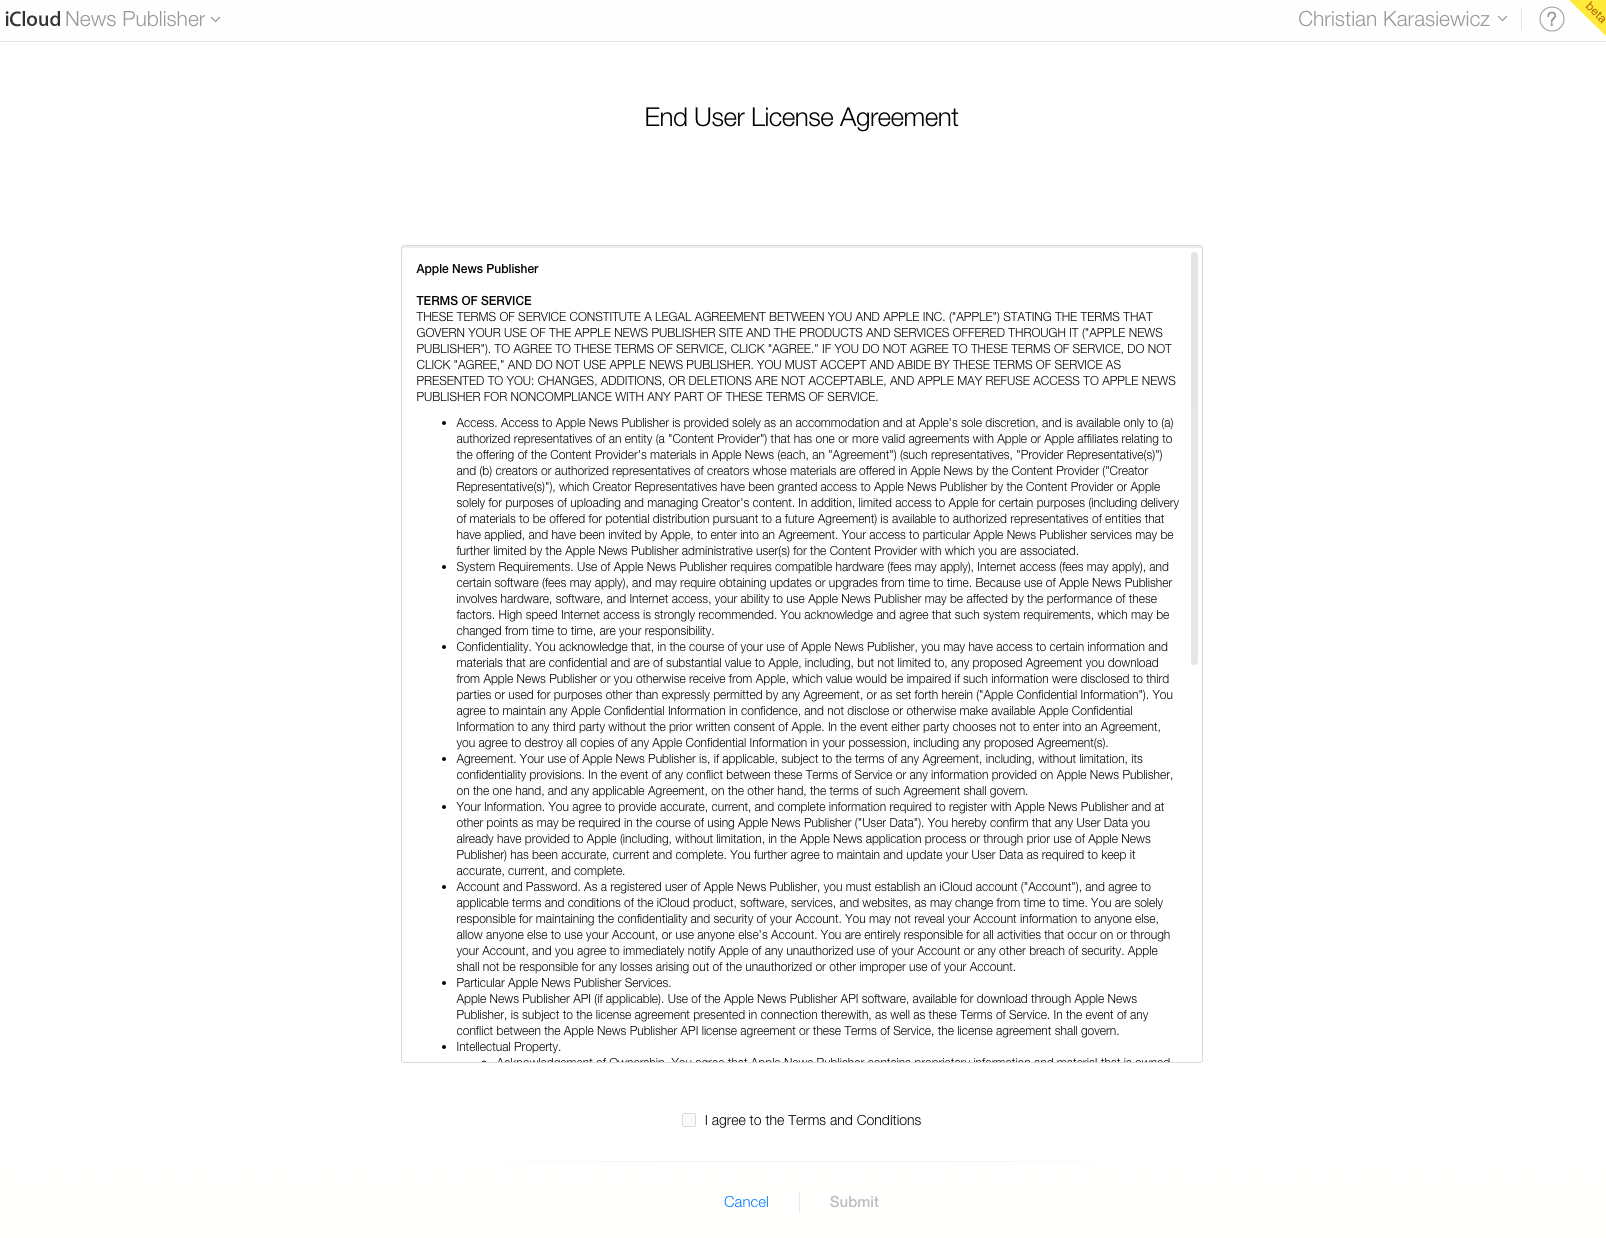 Apple News Publisher user agreement